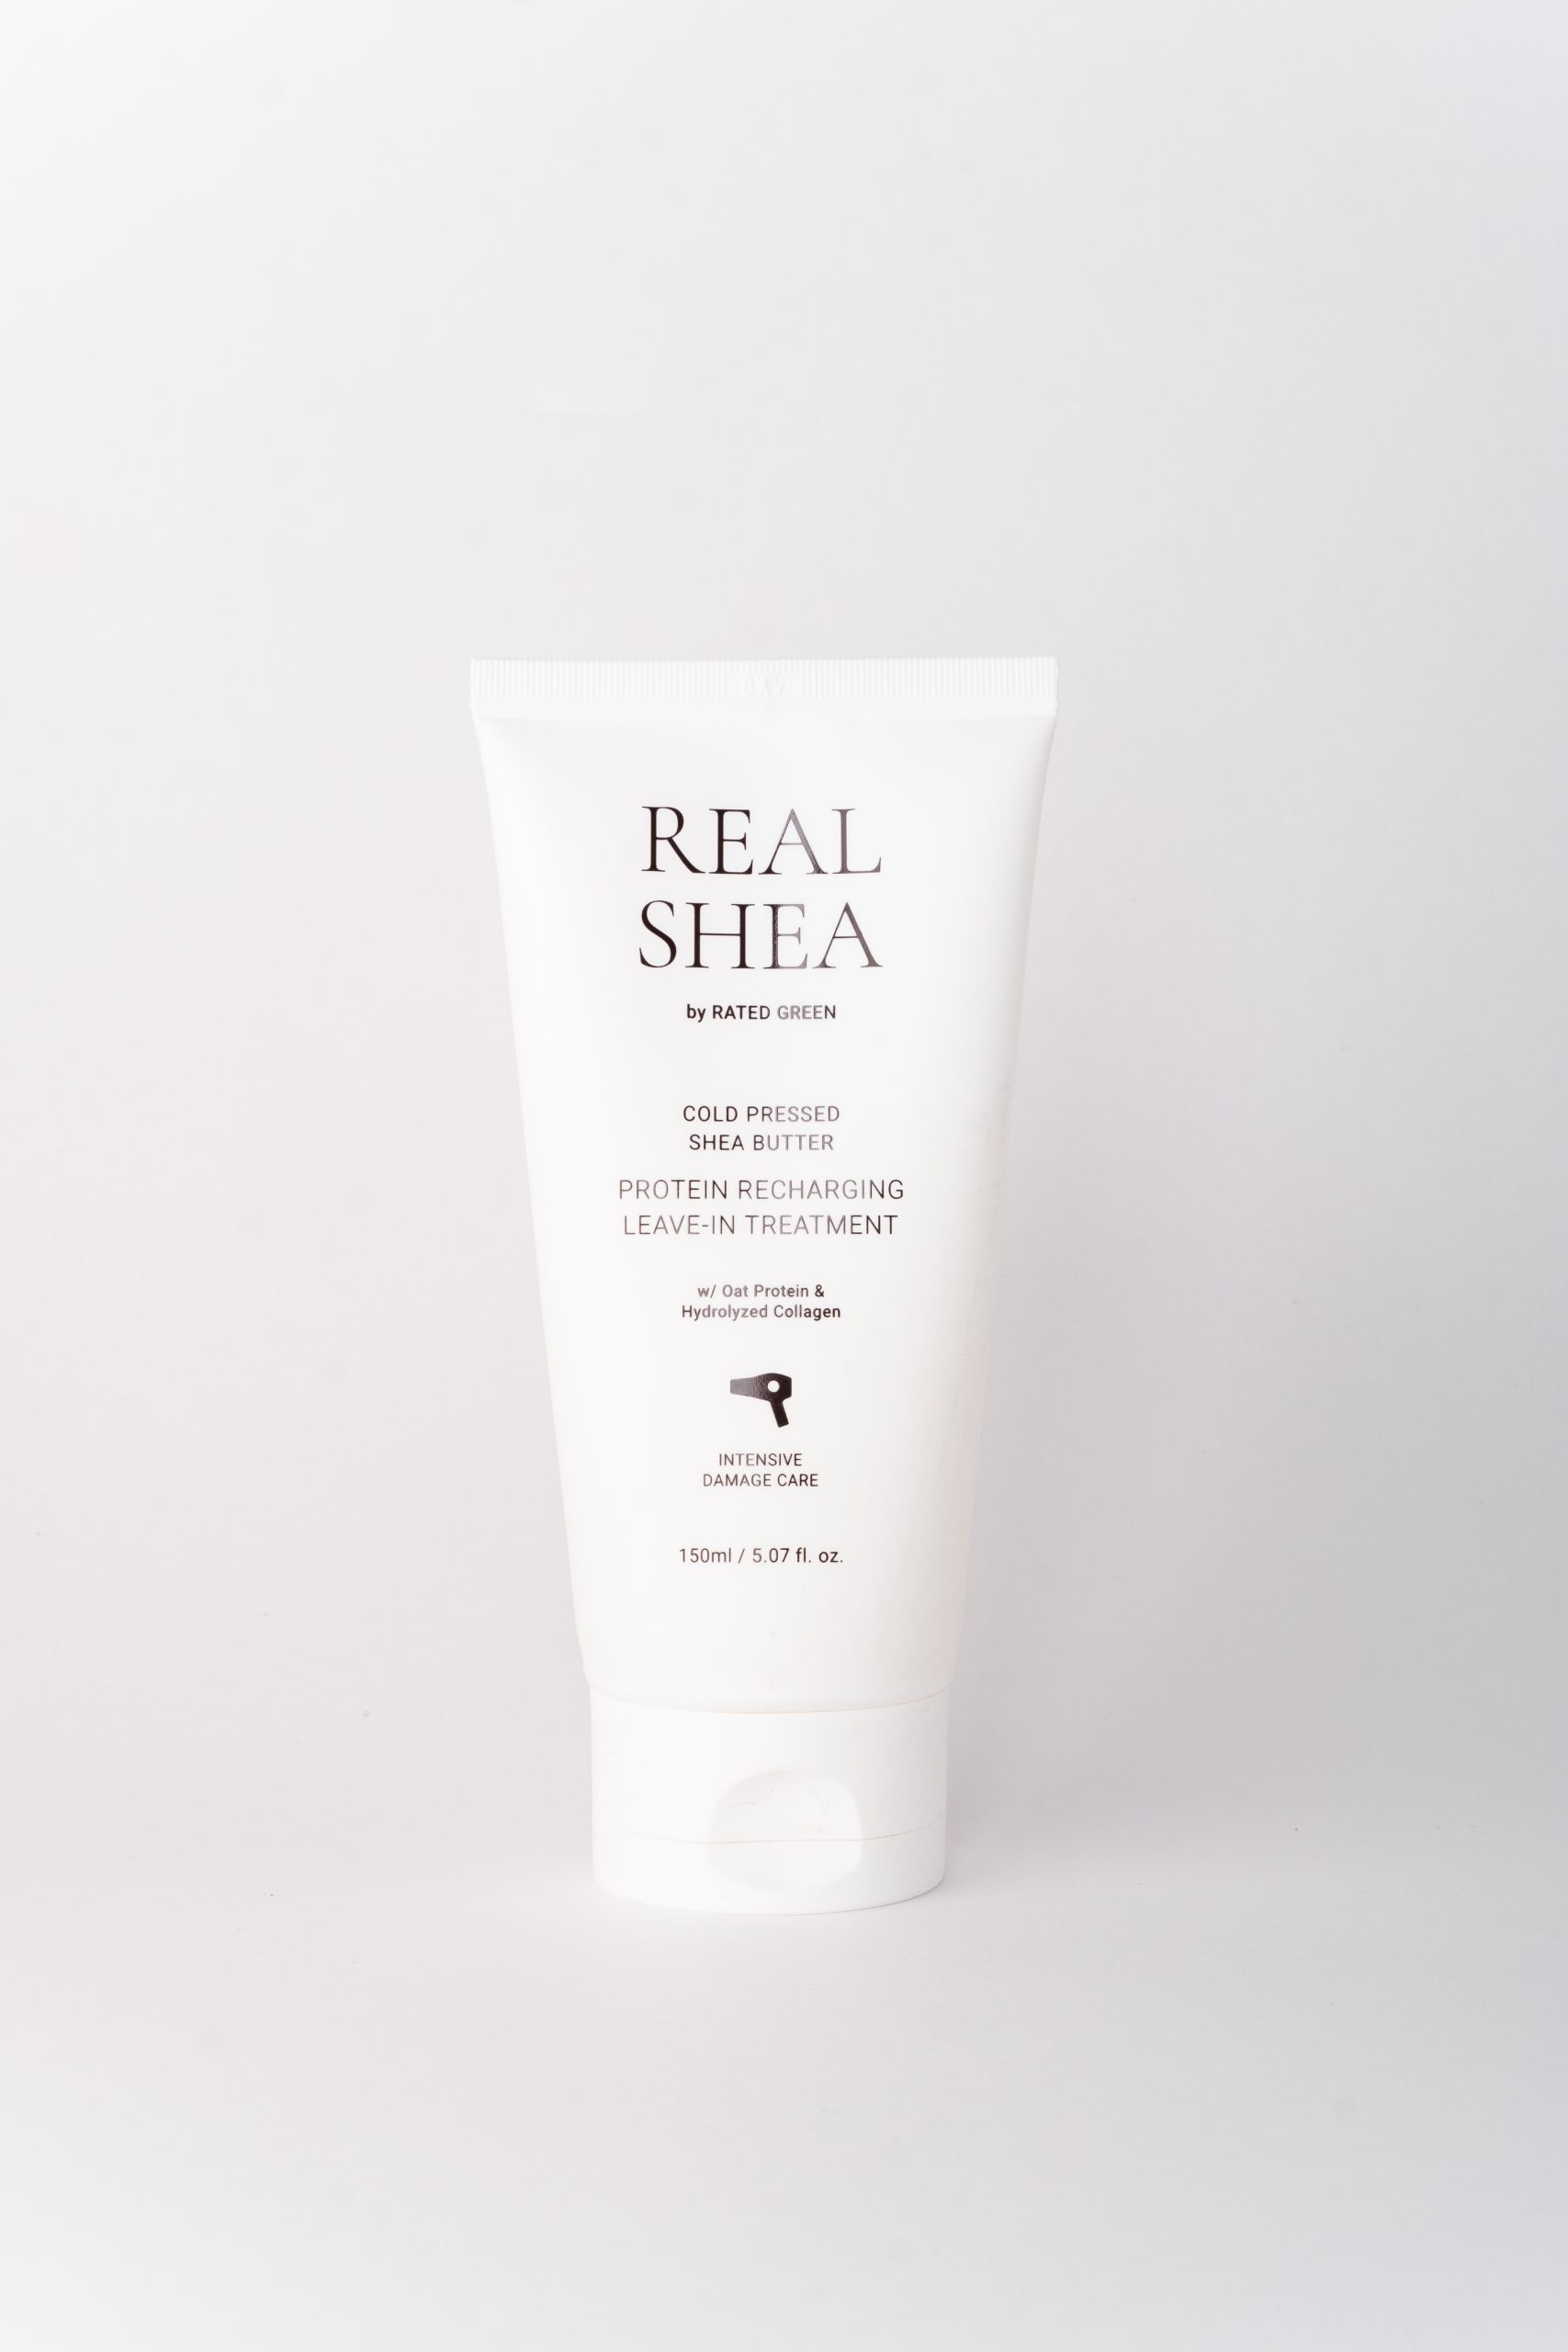 Маска real shea. Rated Green крем для волос. Real Shea by rated Green термозащита. Шампунь mochiki Mask ши. Real Shea change treatment отзывы.